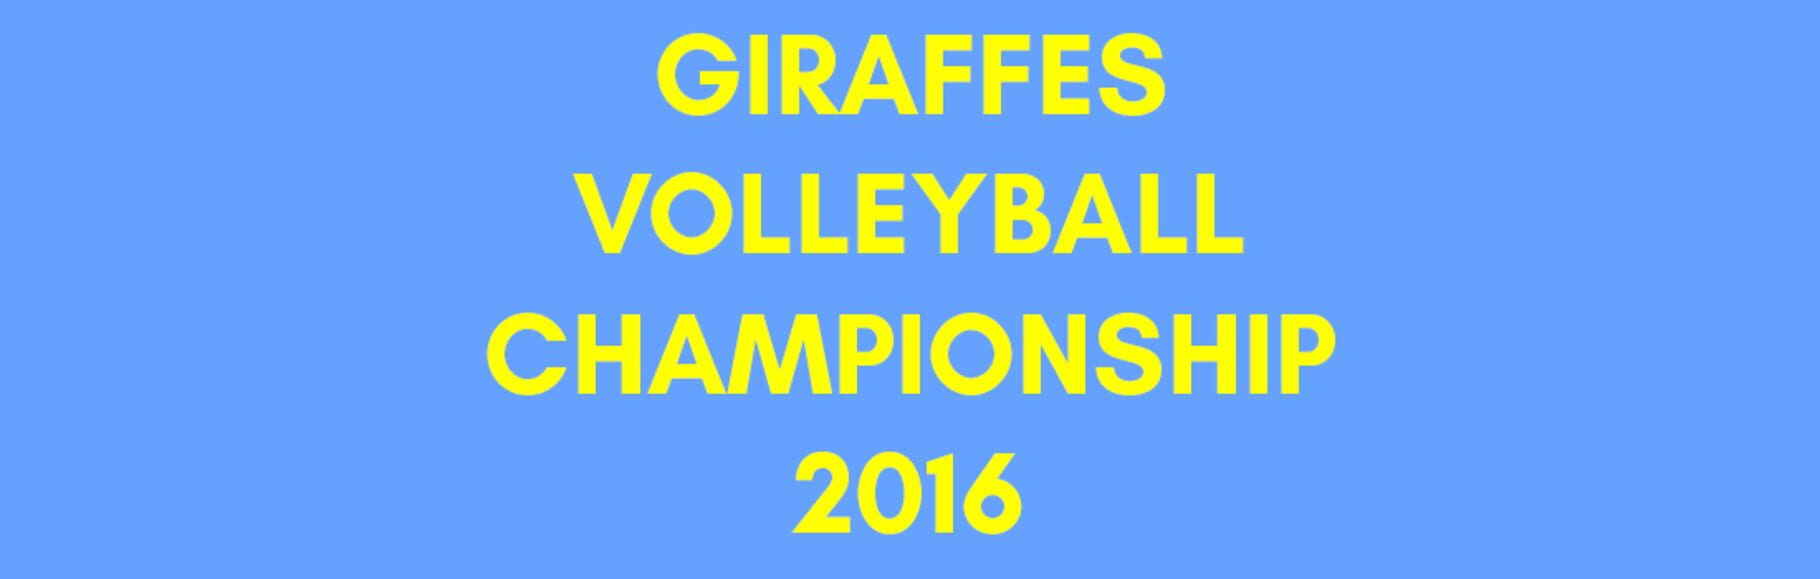 Giraffes Volleyball Championship 2016 Image